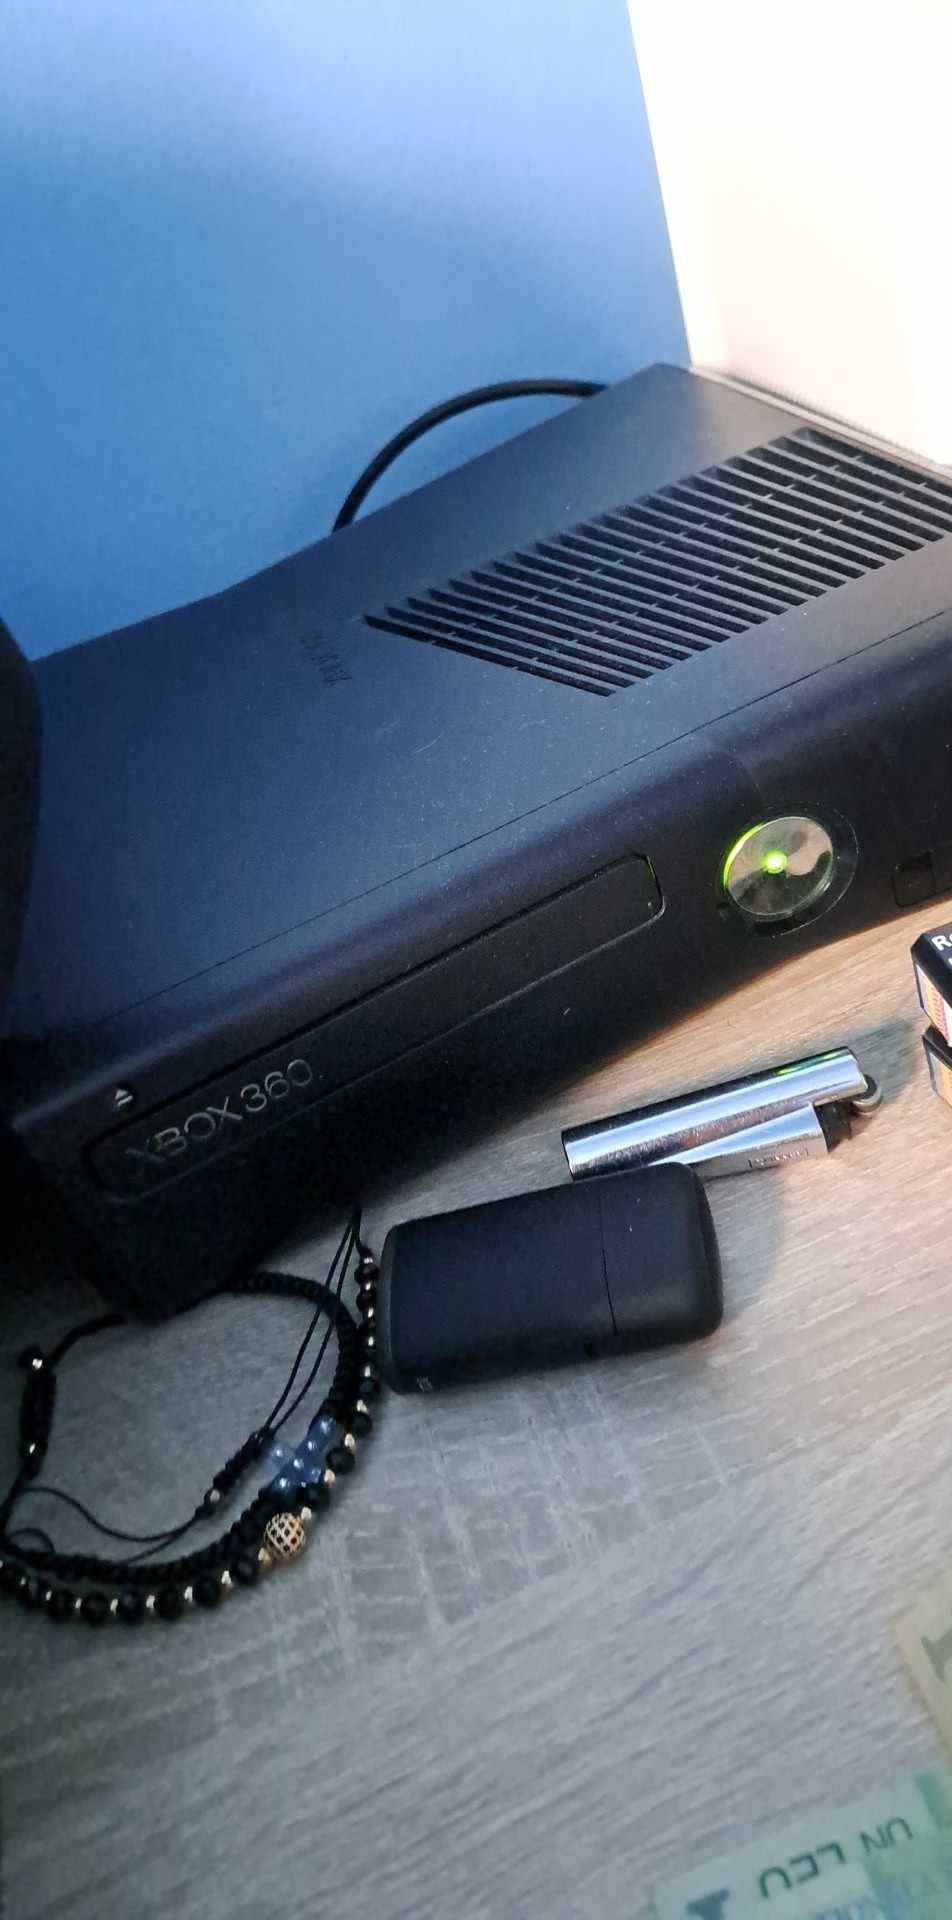 Vand Xbox 360 in perfecta stare
Doua manete,toate cablurile incluse si